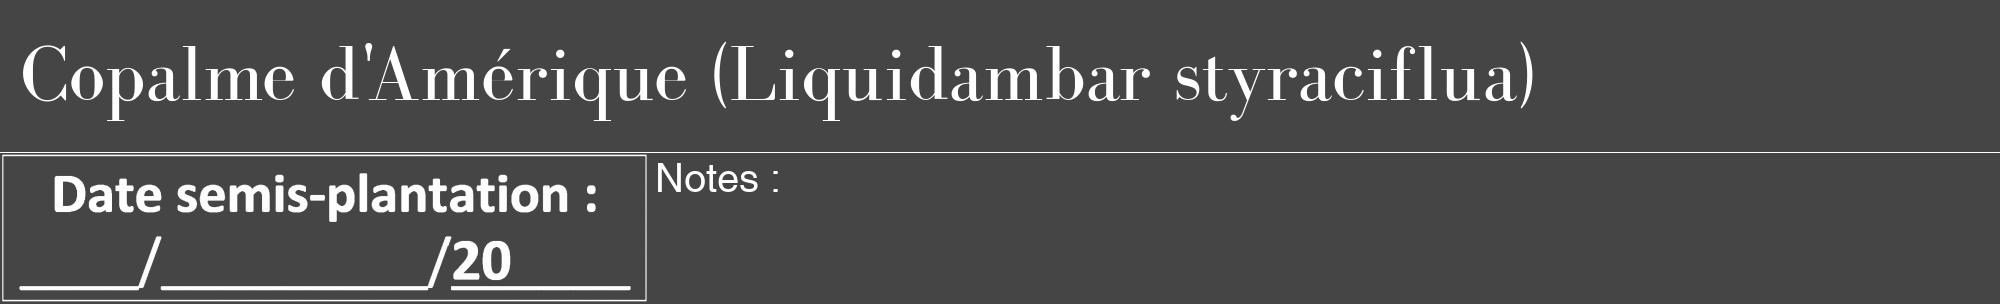 Étiquette de : Liquidambar styraciflua - format a - style blanche58bod avec comestibilité